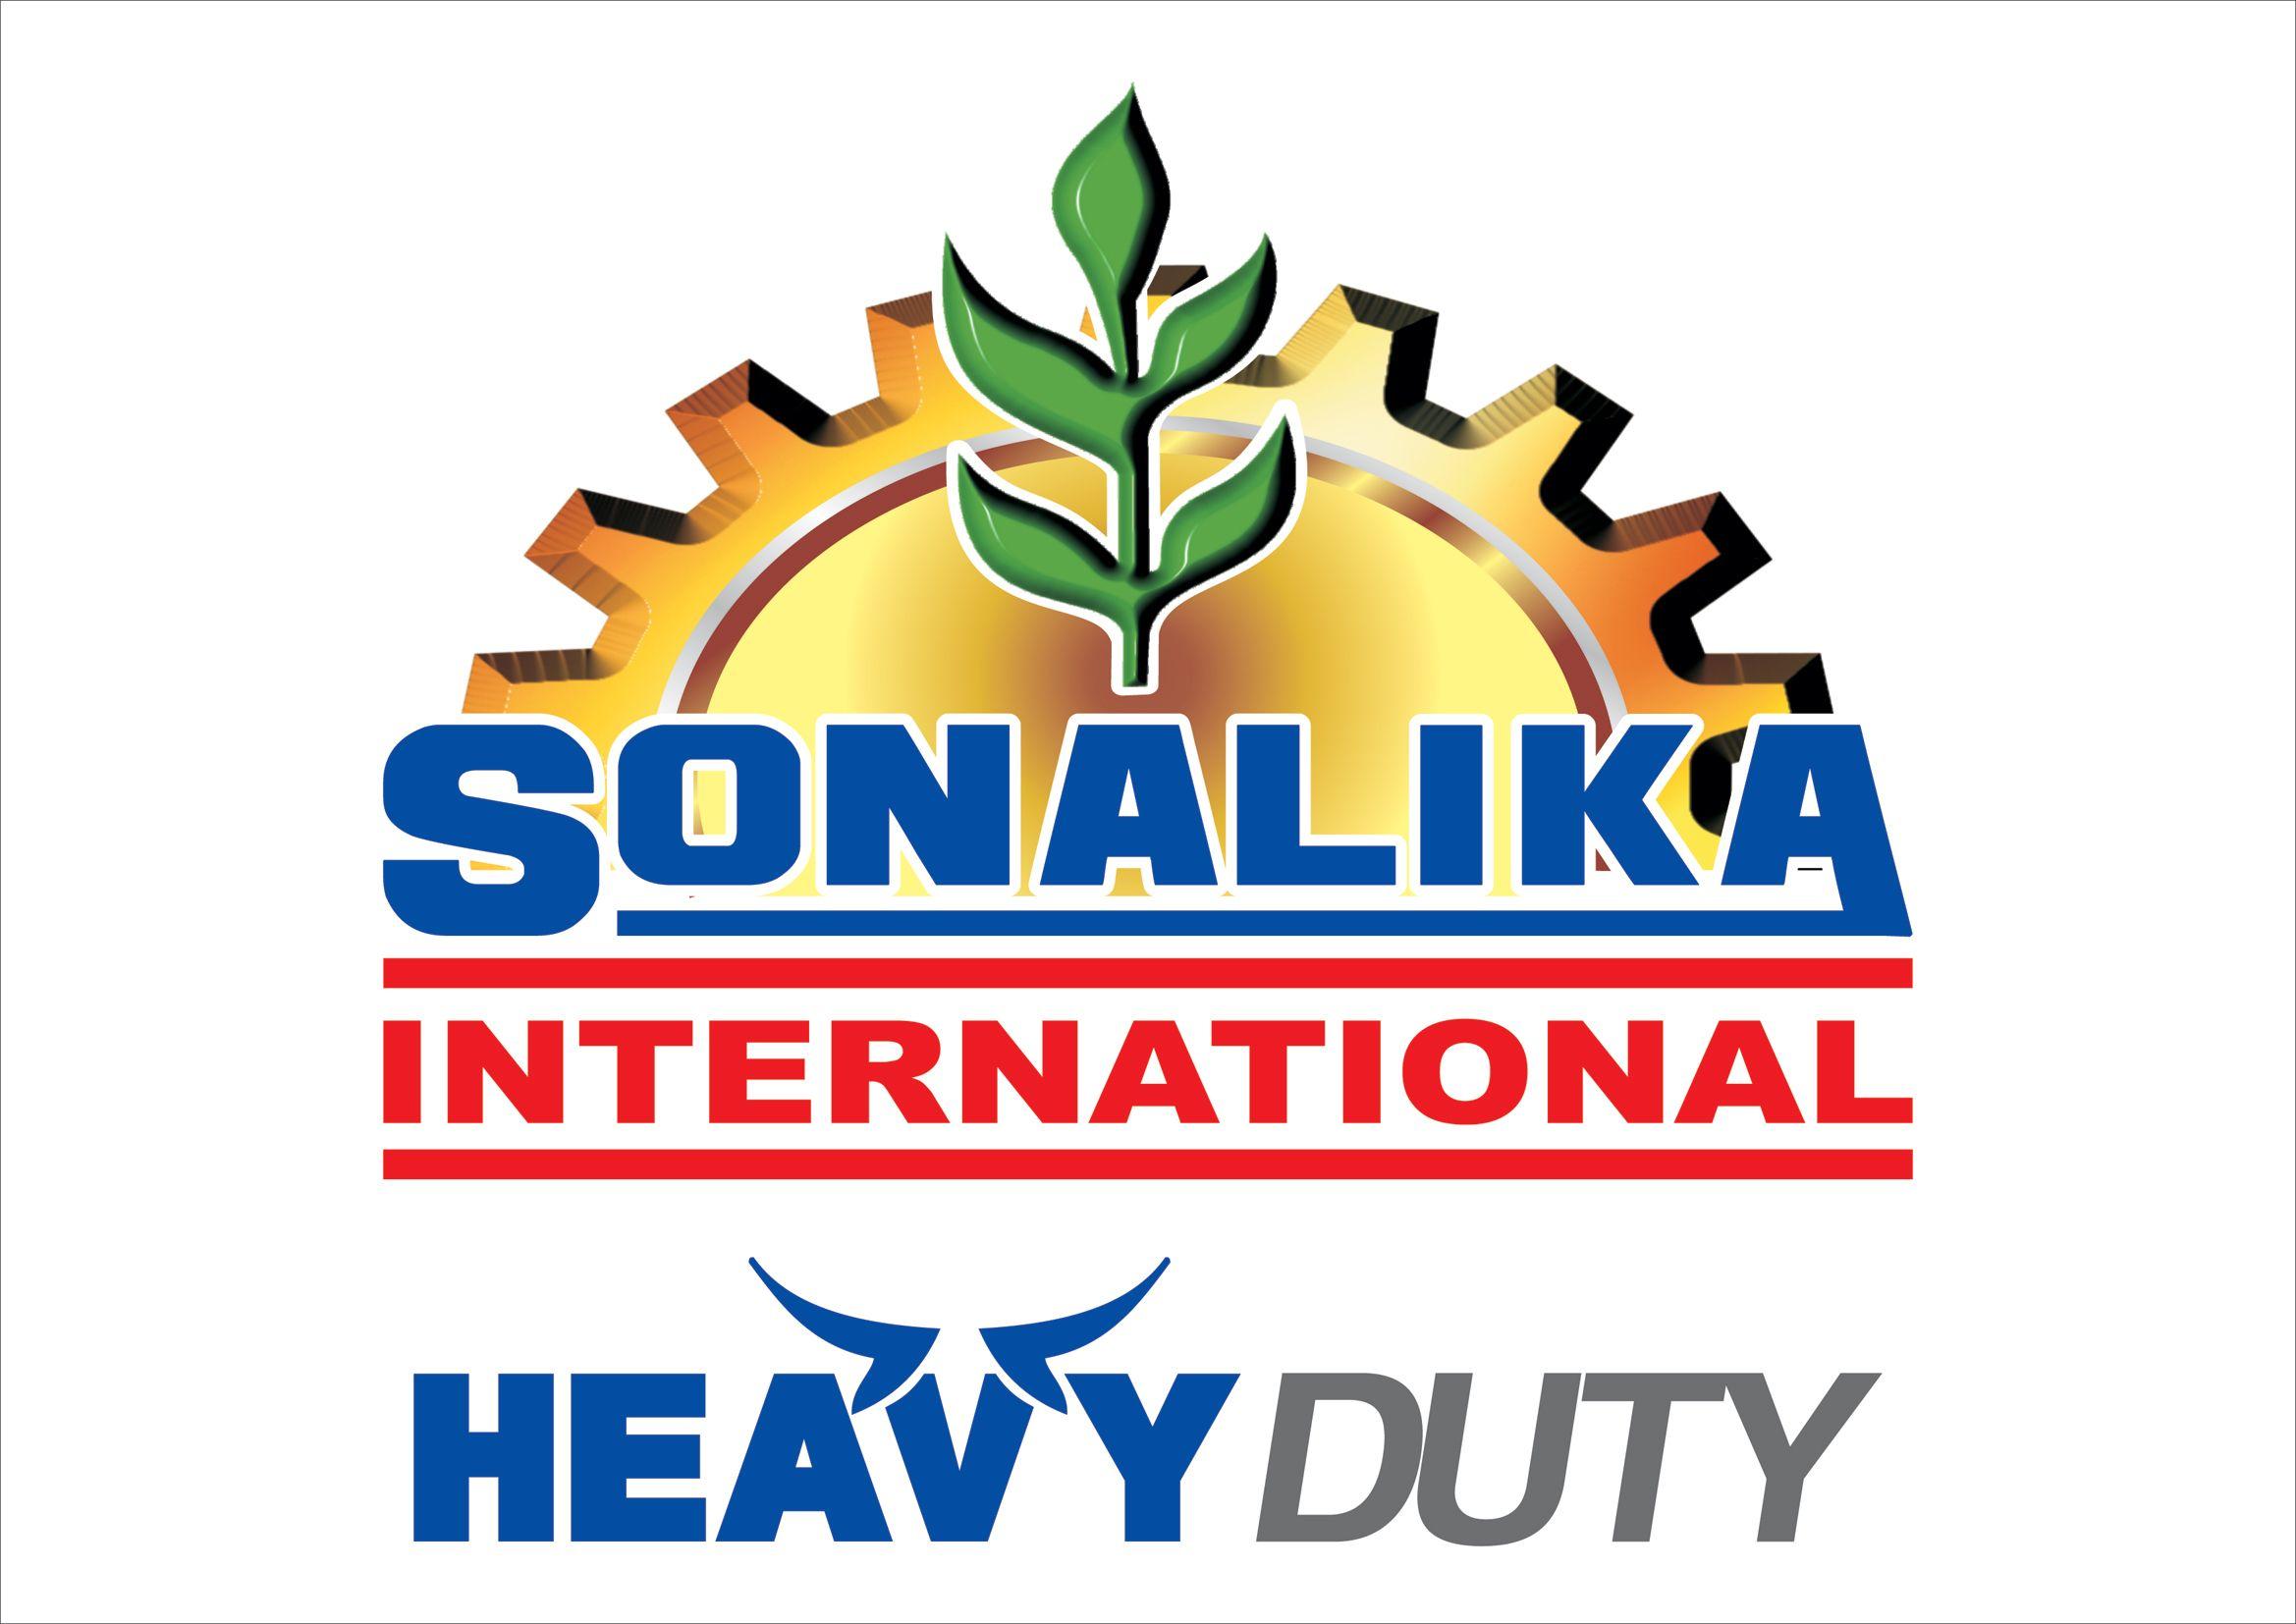 Sonalika Logo - File:SONALIKA LOGO hd.jpg - Wikimedia Commons